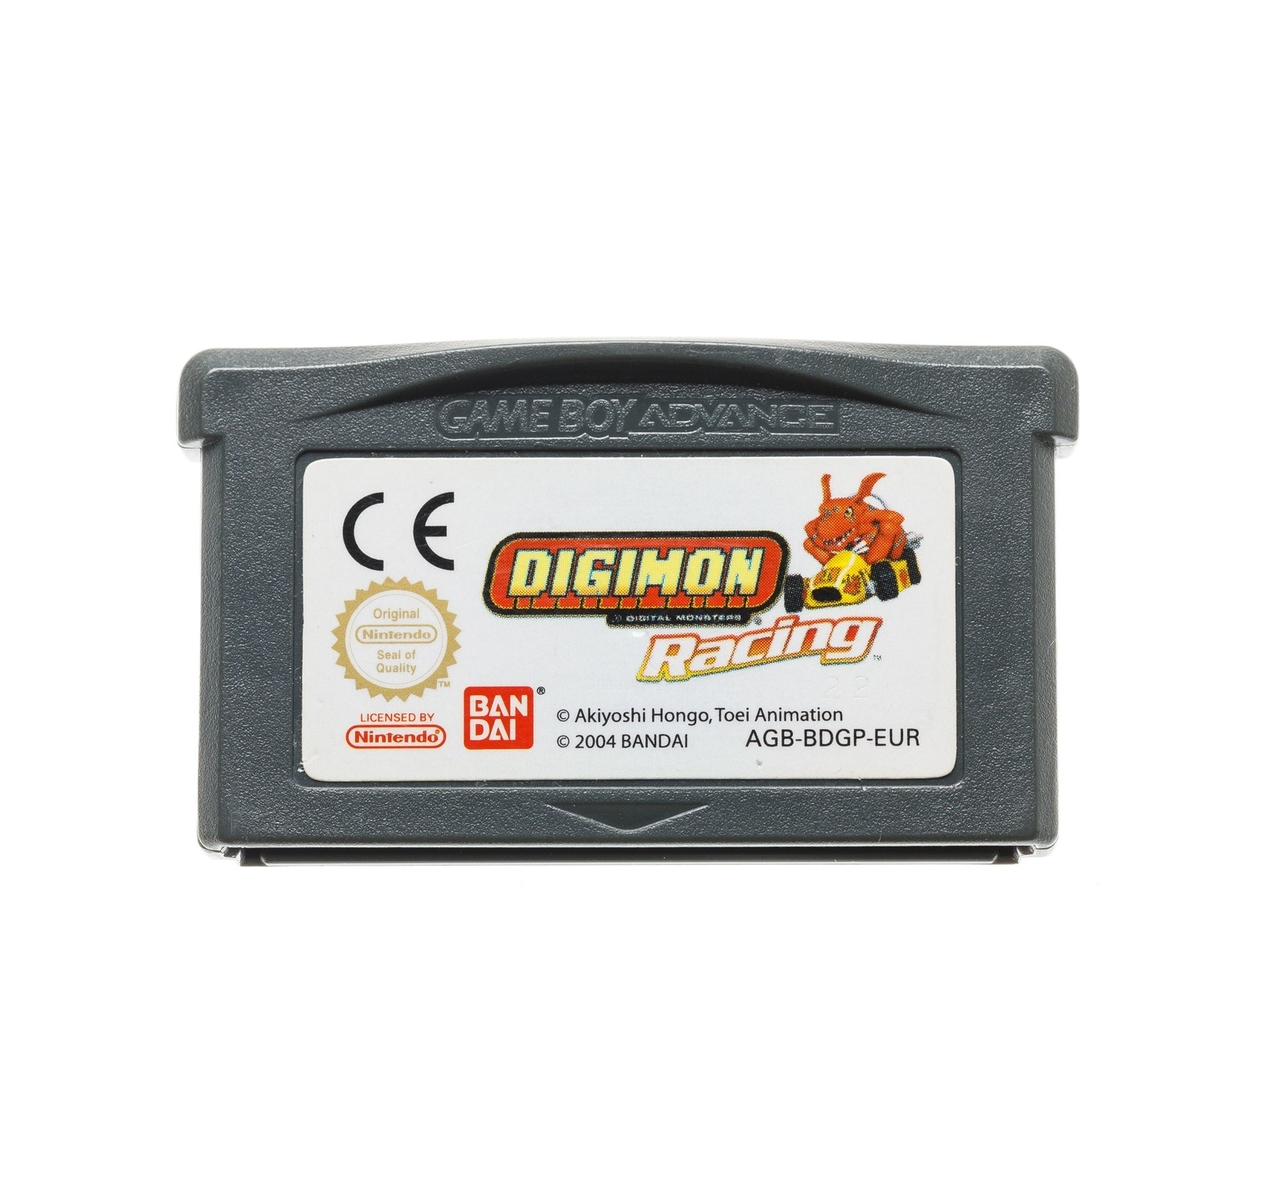 Digimon Racing - Gameboy Advance Games